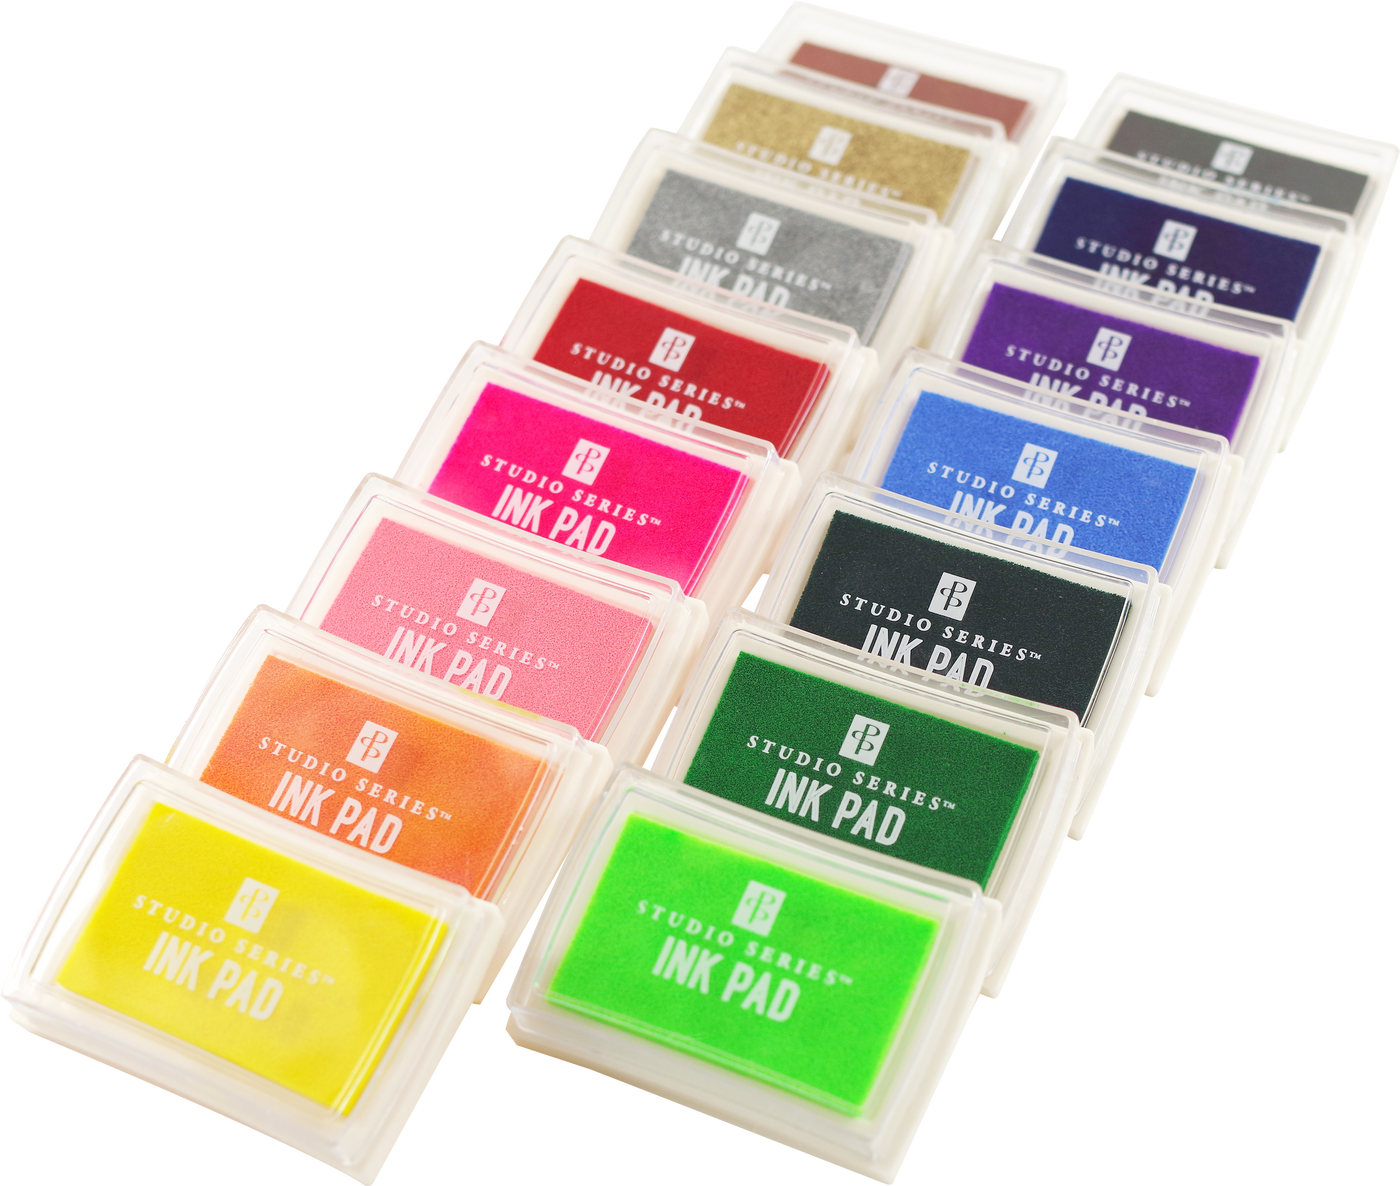 Studio Series Ink Pad Set (15 colors)